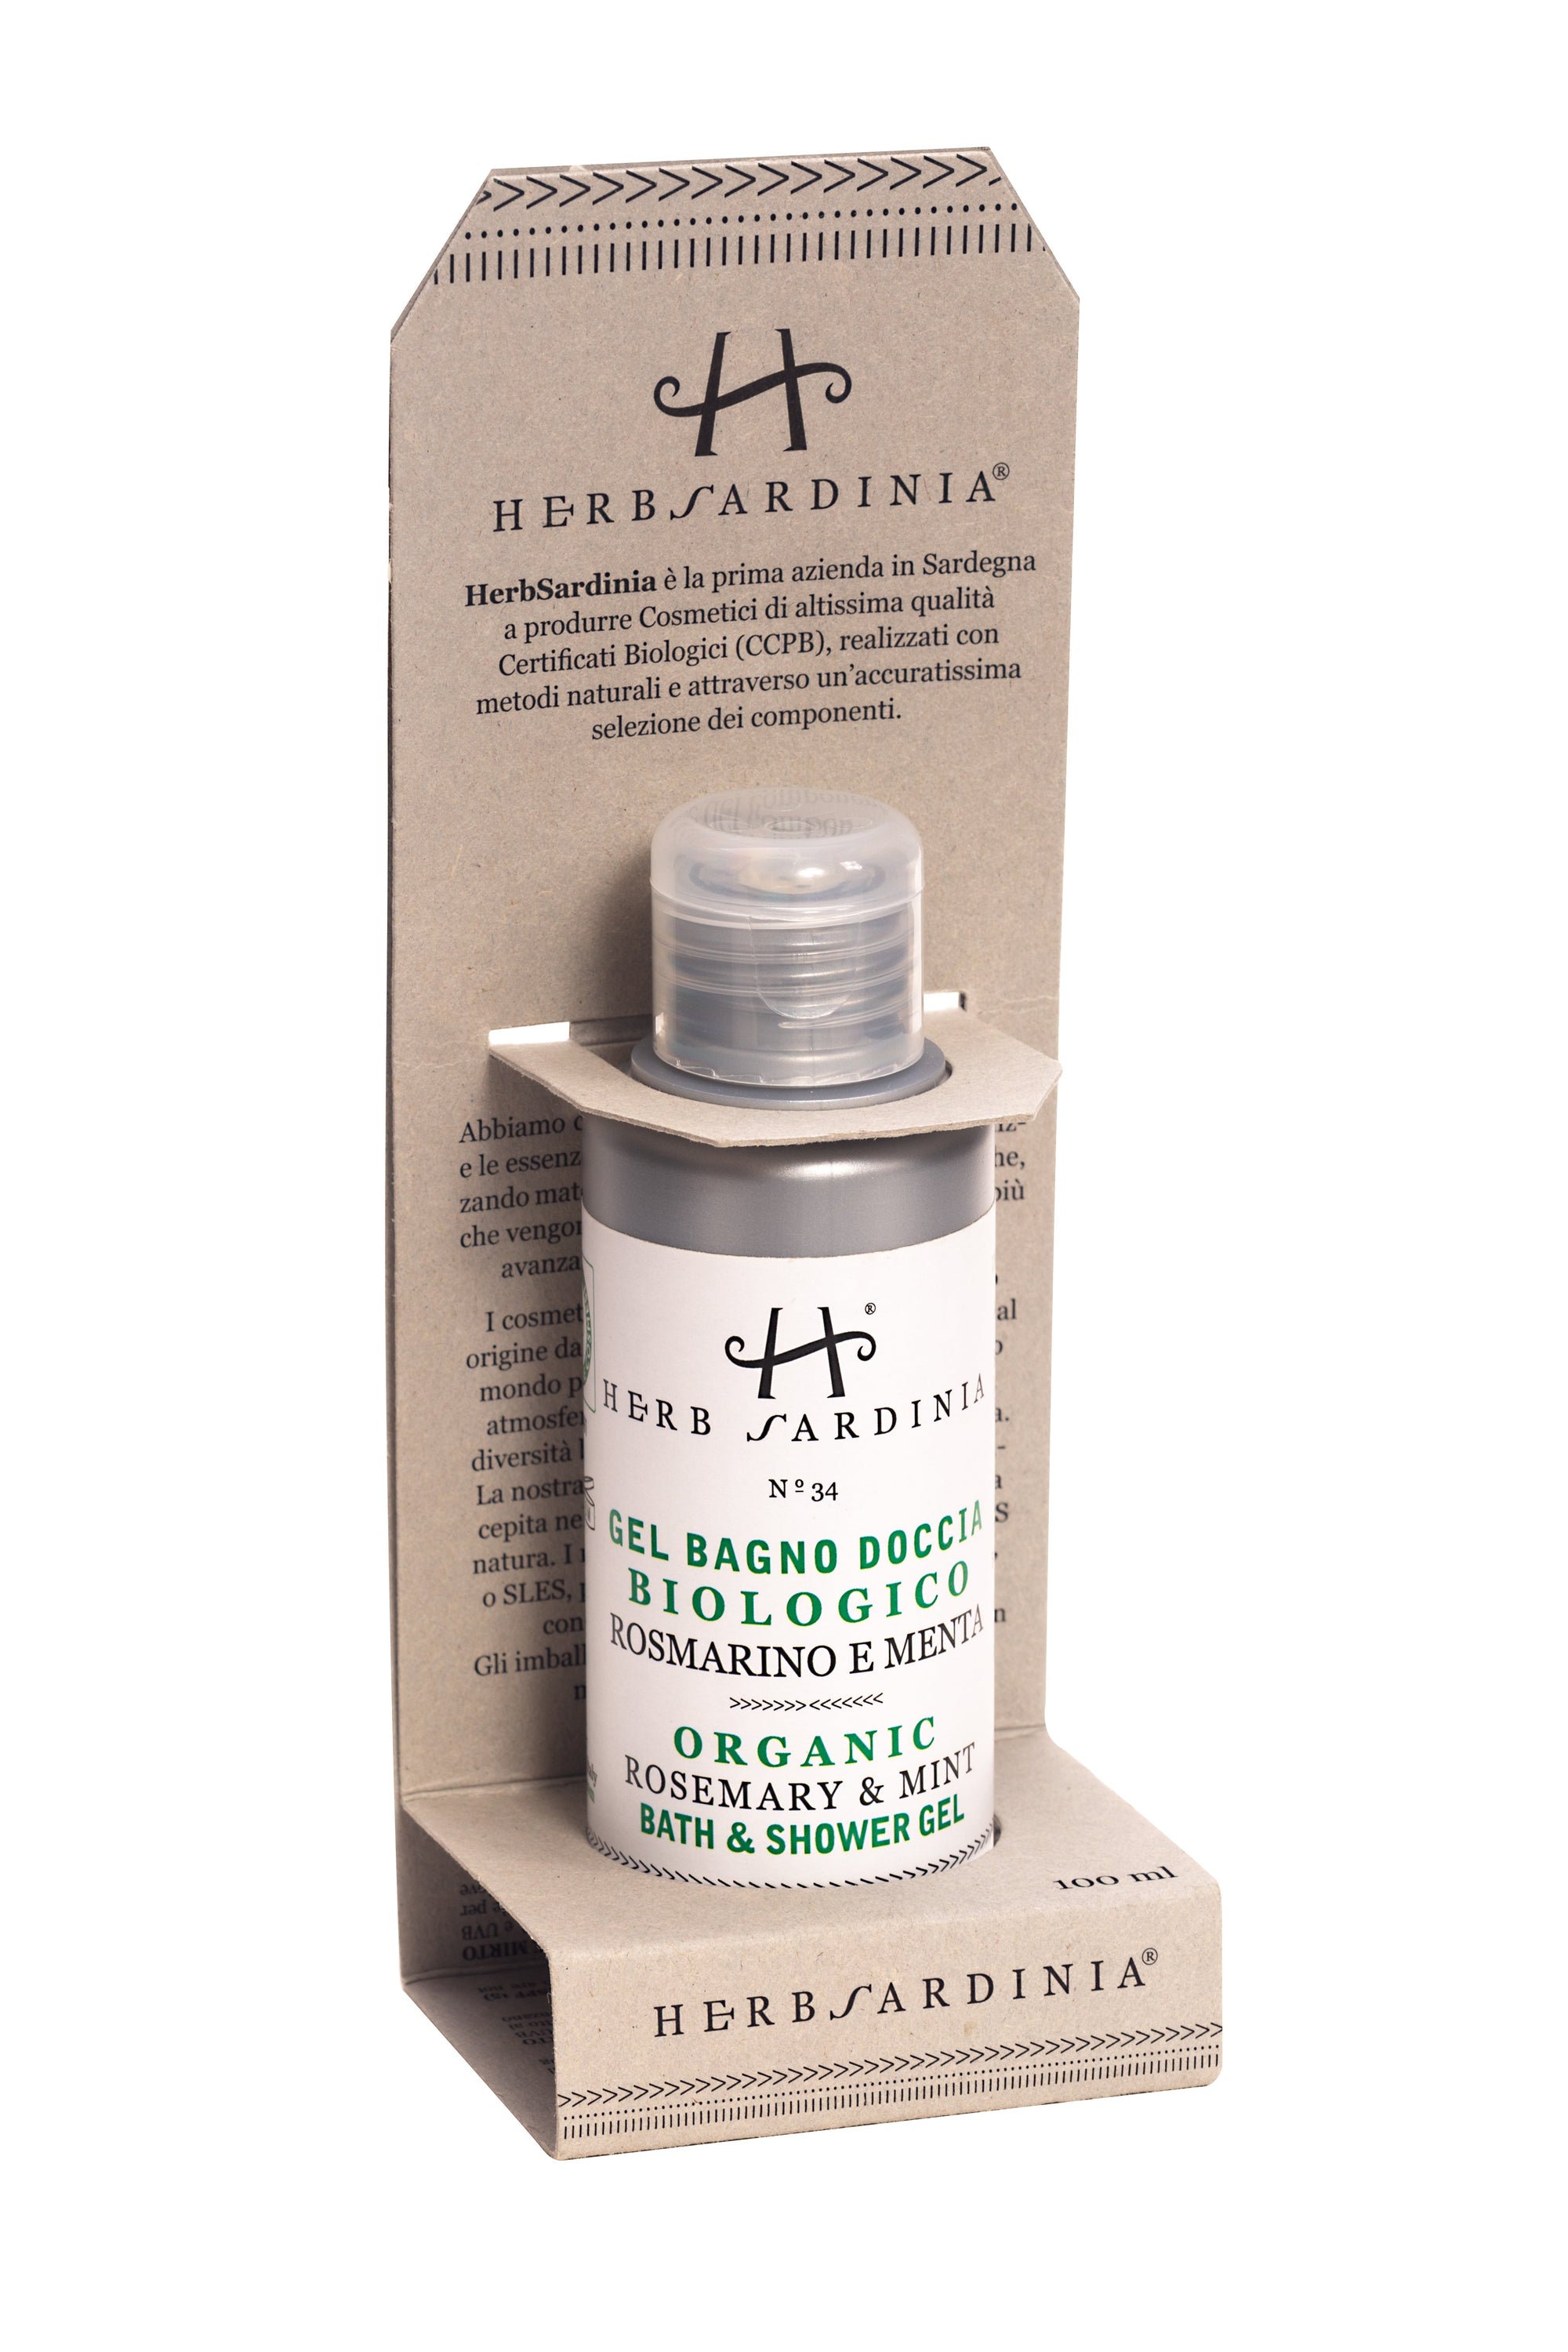 HerbSardinia | Organic Rosemary & Mint Aromatic Bath & Shower Gel 100 ml